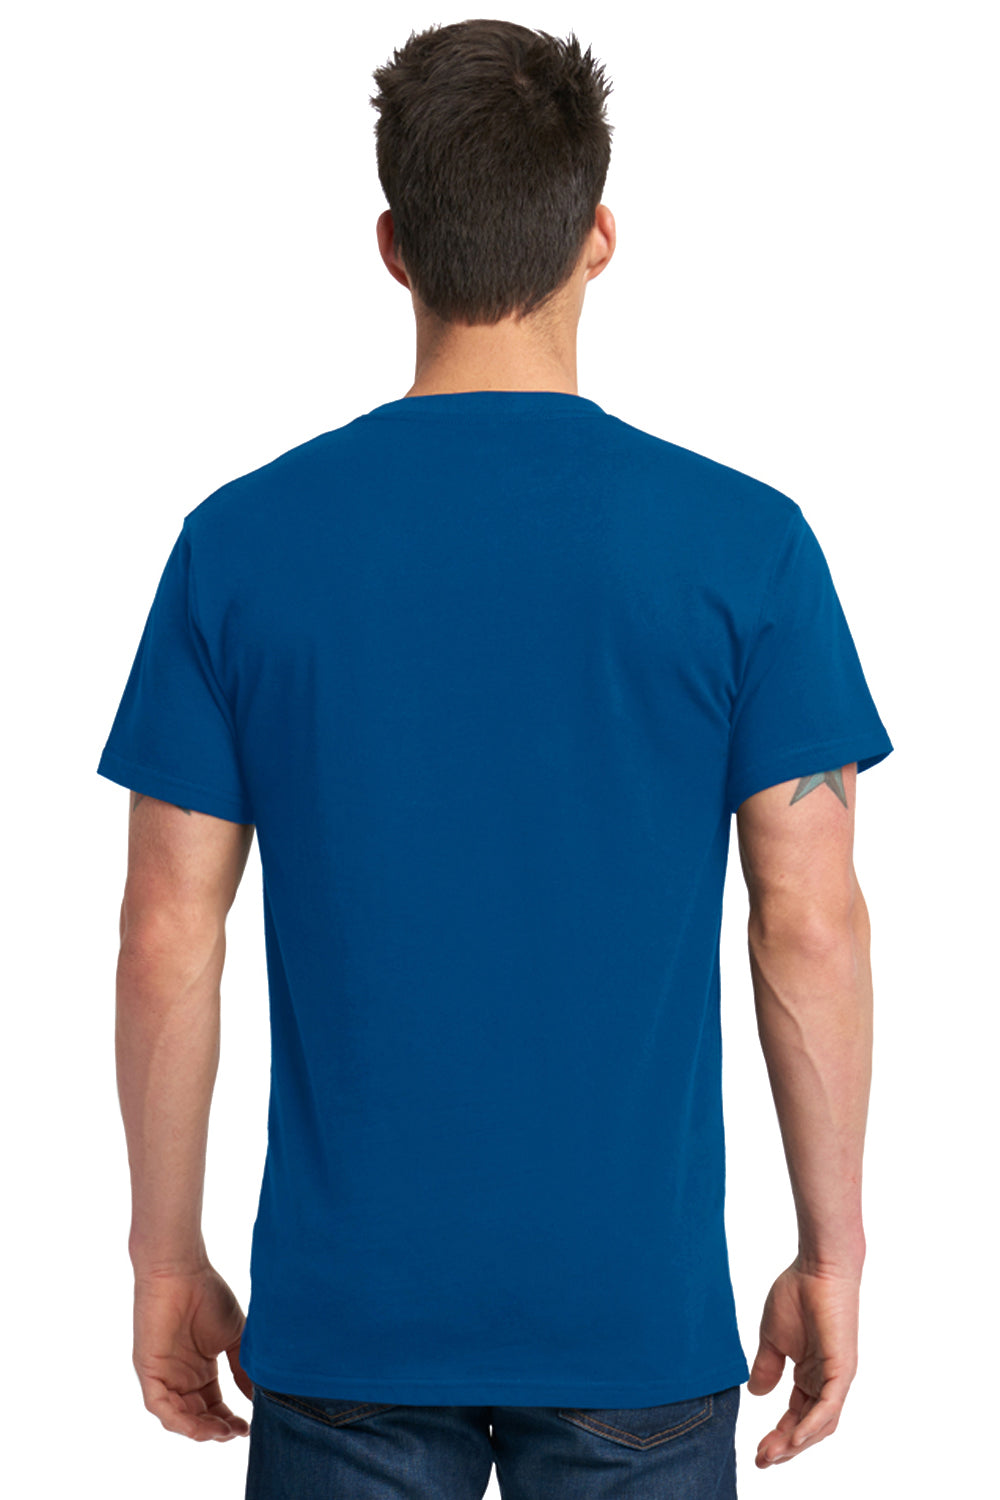 Next Level 7410S Mens Power Short Sleeve Crewneck T-Shirt Royal Blue Back